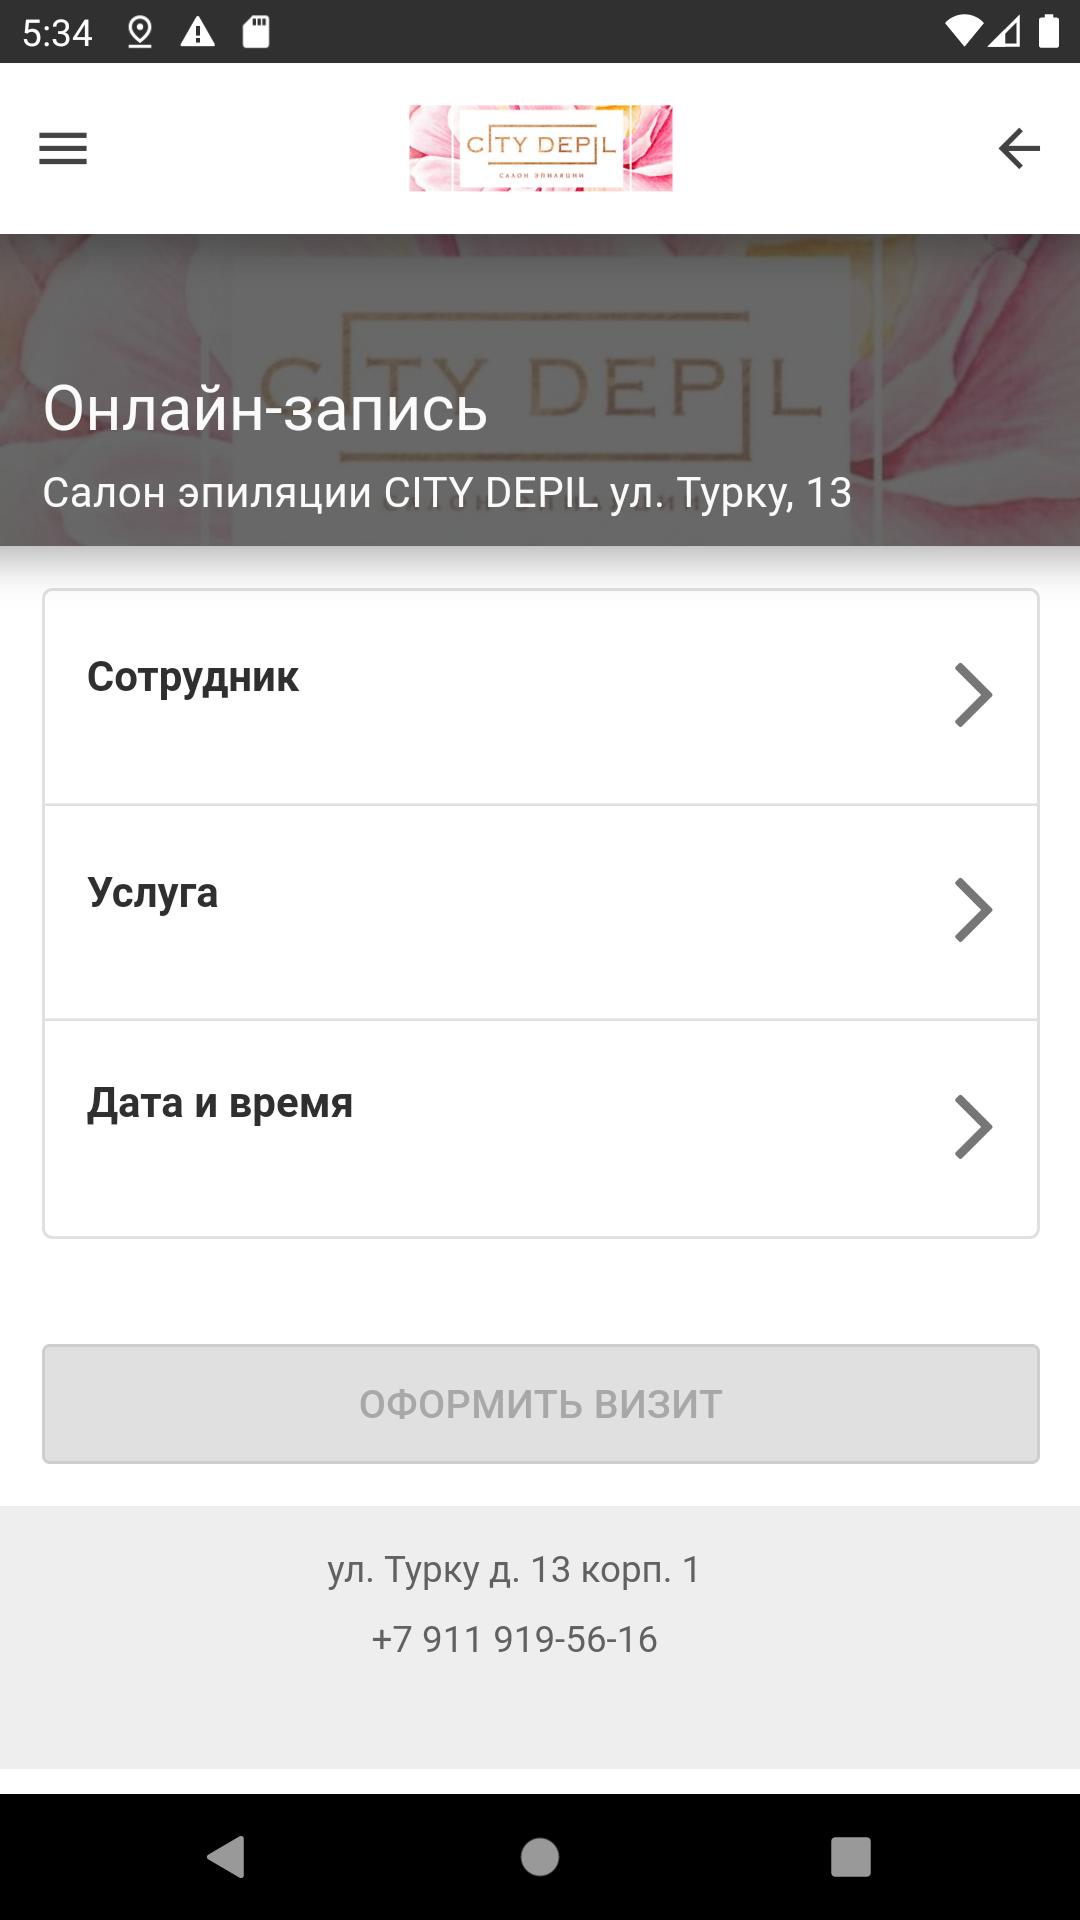 City Depil 13.15.0 Screenshot 2